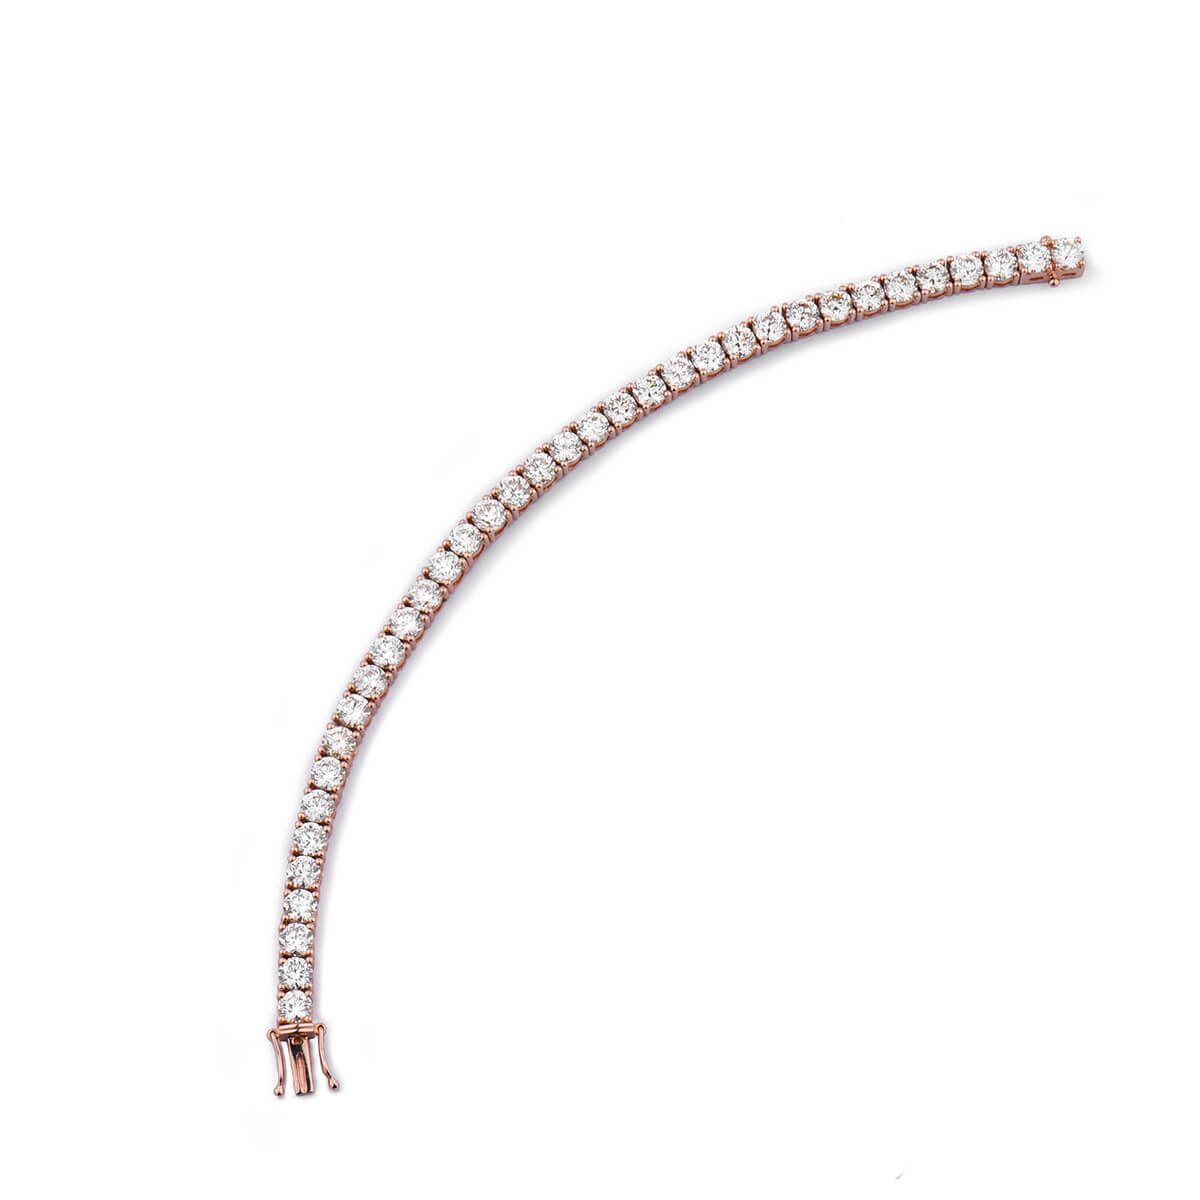  White Diamond Bracelet, 11.26 Ct. TW, Round shape, EG_Lab Certified, J5826174437